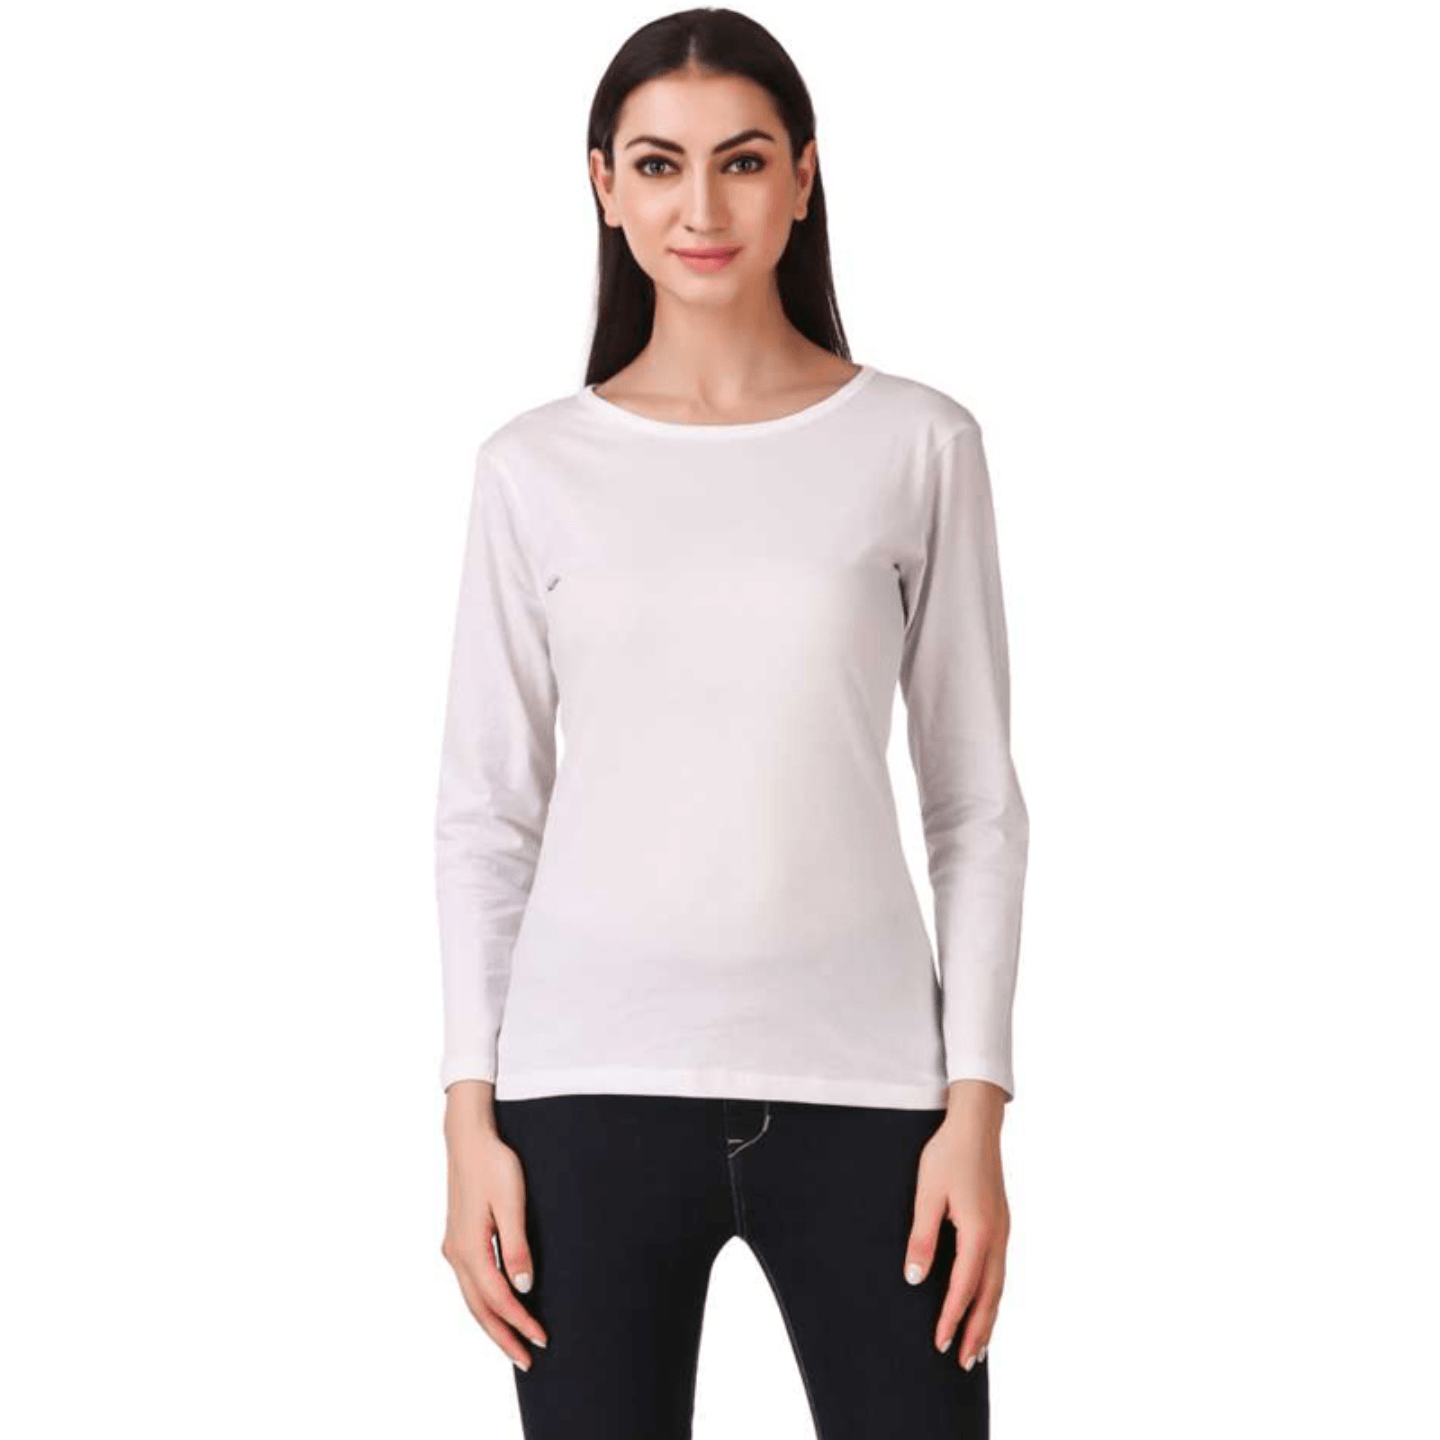 Paretto White Full Sleeves Cotton T-shirt for Women